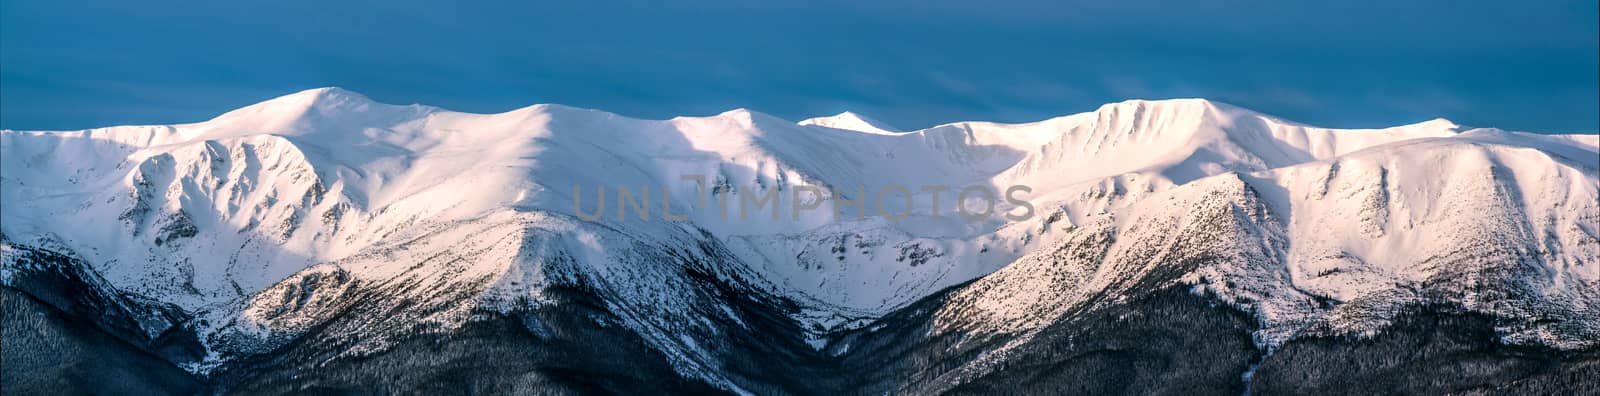 High mountain ridge by oleksandrmazur